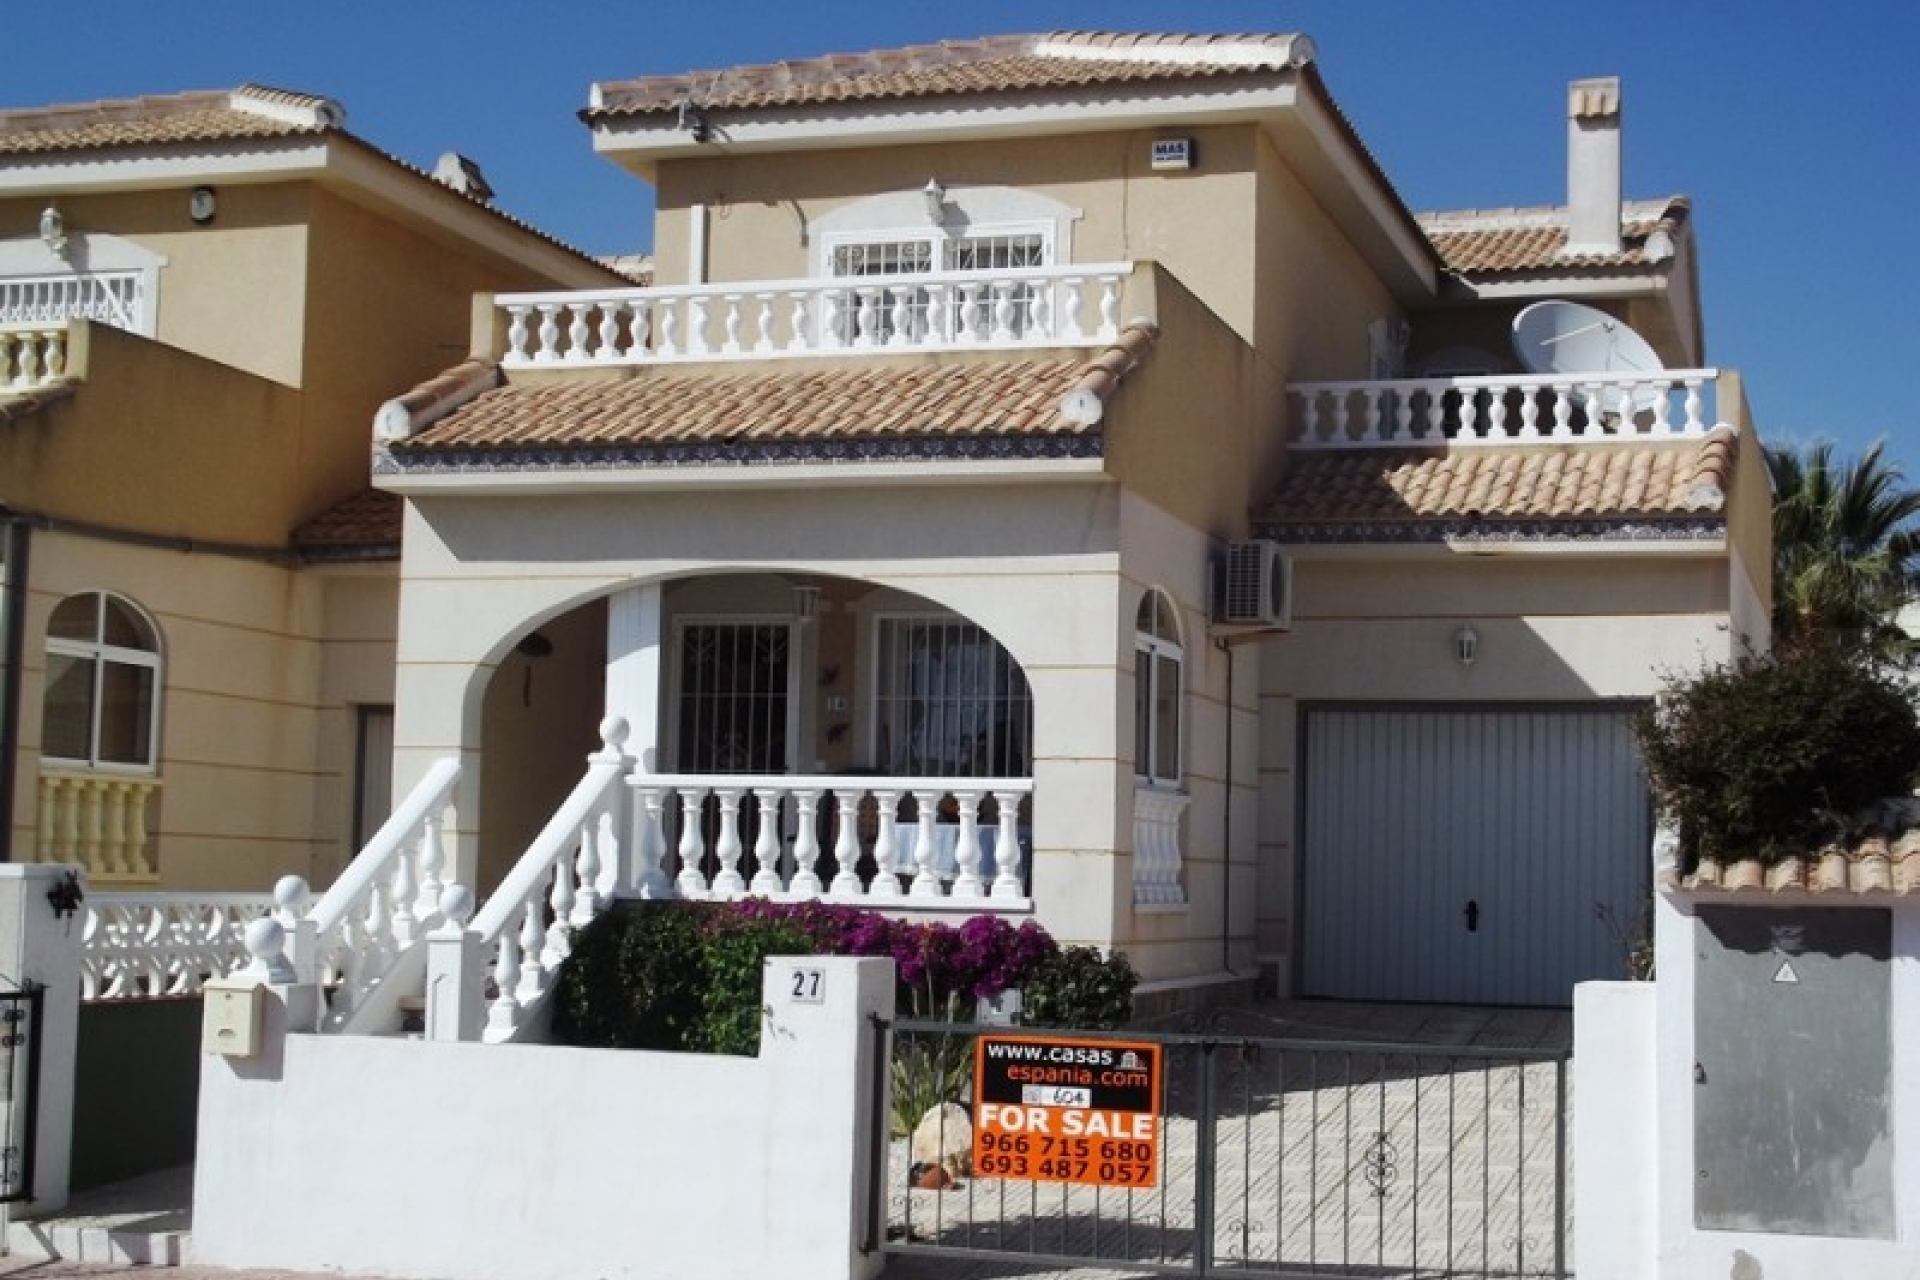 Cheap bargain property for sale in monte azul, close to benijofar and quesada, villa for sale, cost blanca, spain cheap.